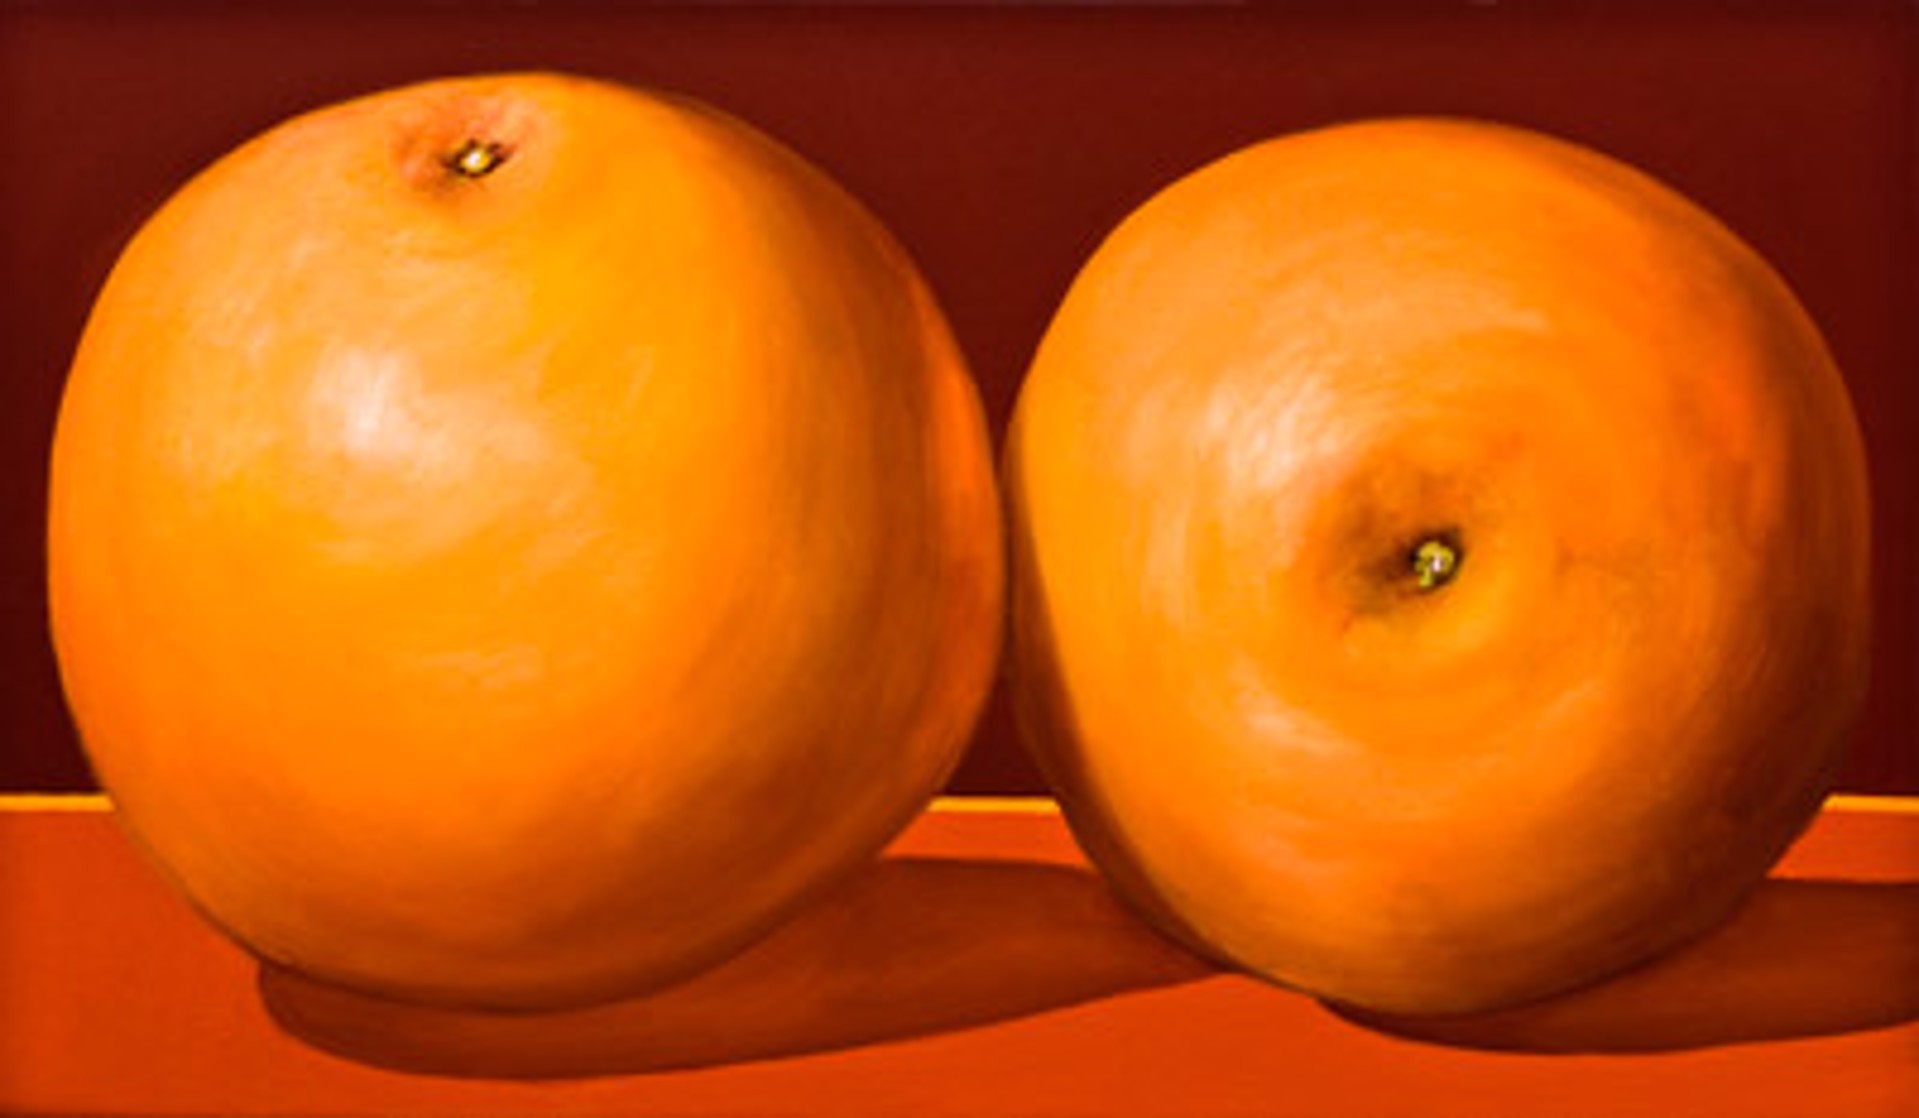 Two Oranges on Burgundy Brown by Bill Chisholm